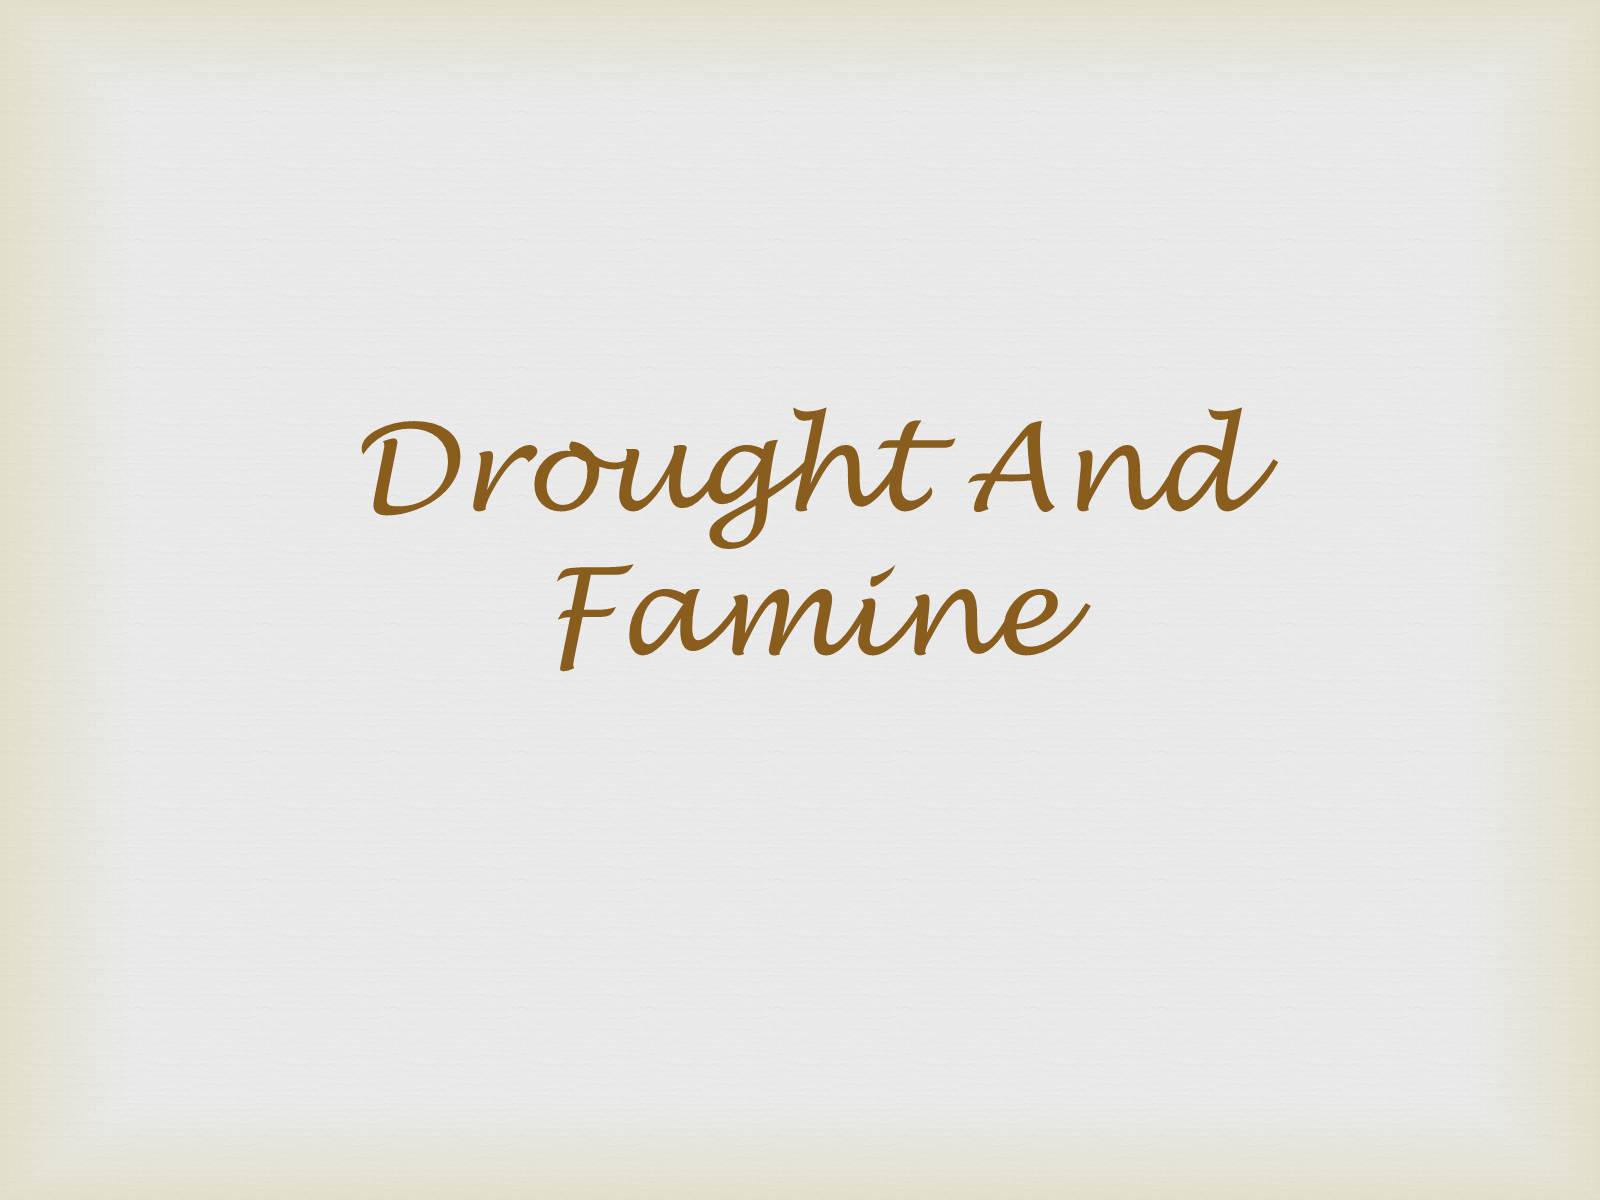 Презентація на тему «Drought And Famine» - Слайд #1